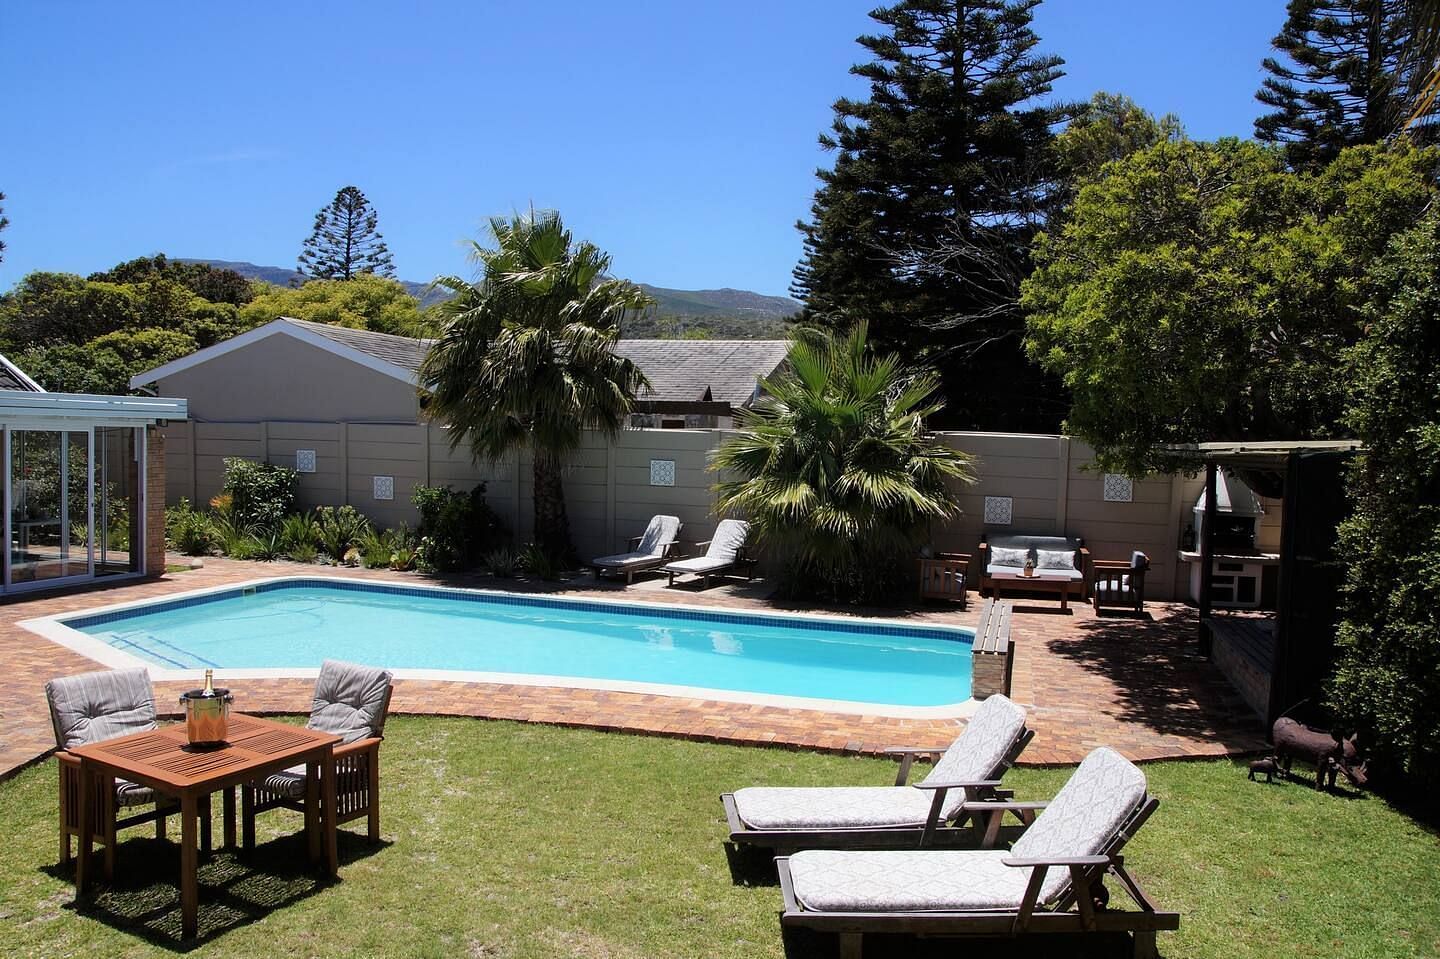 JWguest Residential Home at Cape Town, Western Cape | Wonderful Studio Apartment between 2 Oceans #1 | Jwbnb no brobnb 16